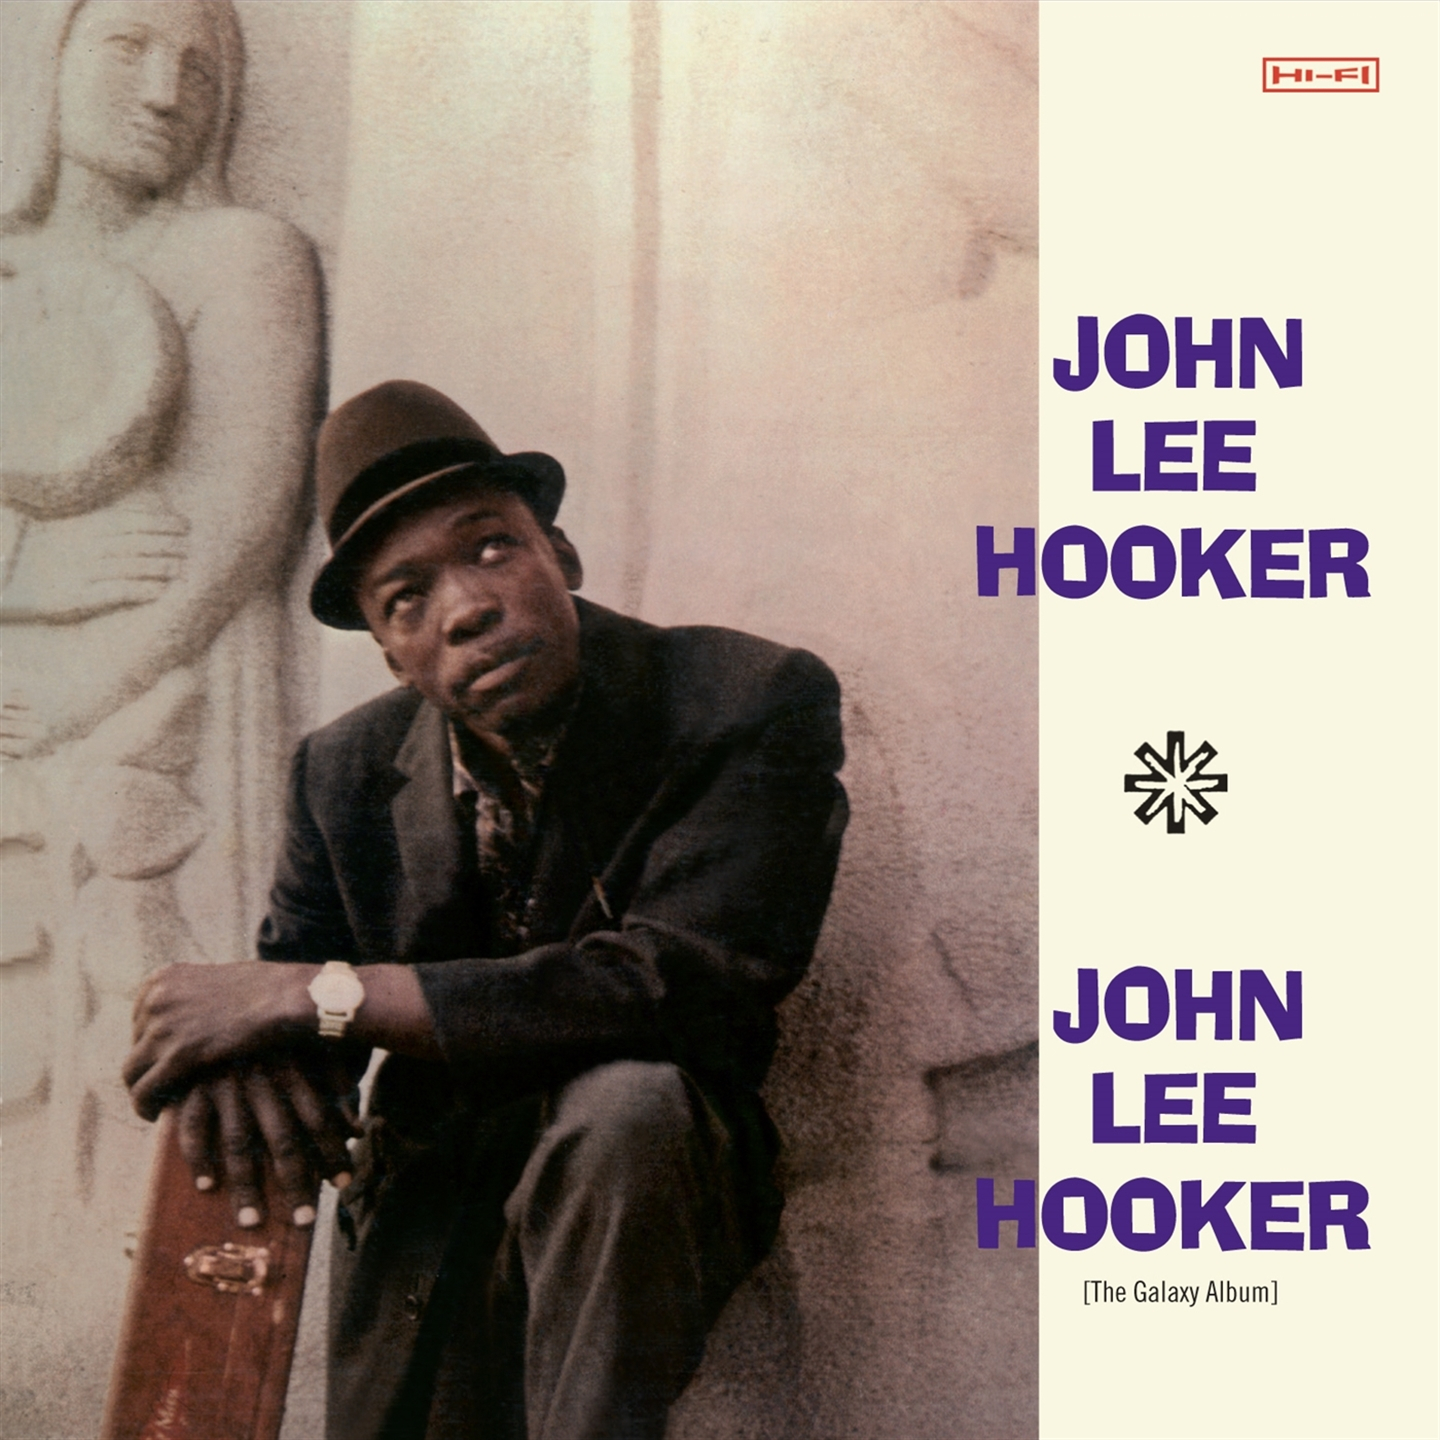 JOHN LEE HOOKER (THE GALAXY ALBUM)